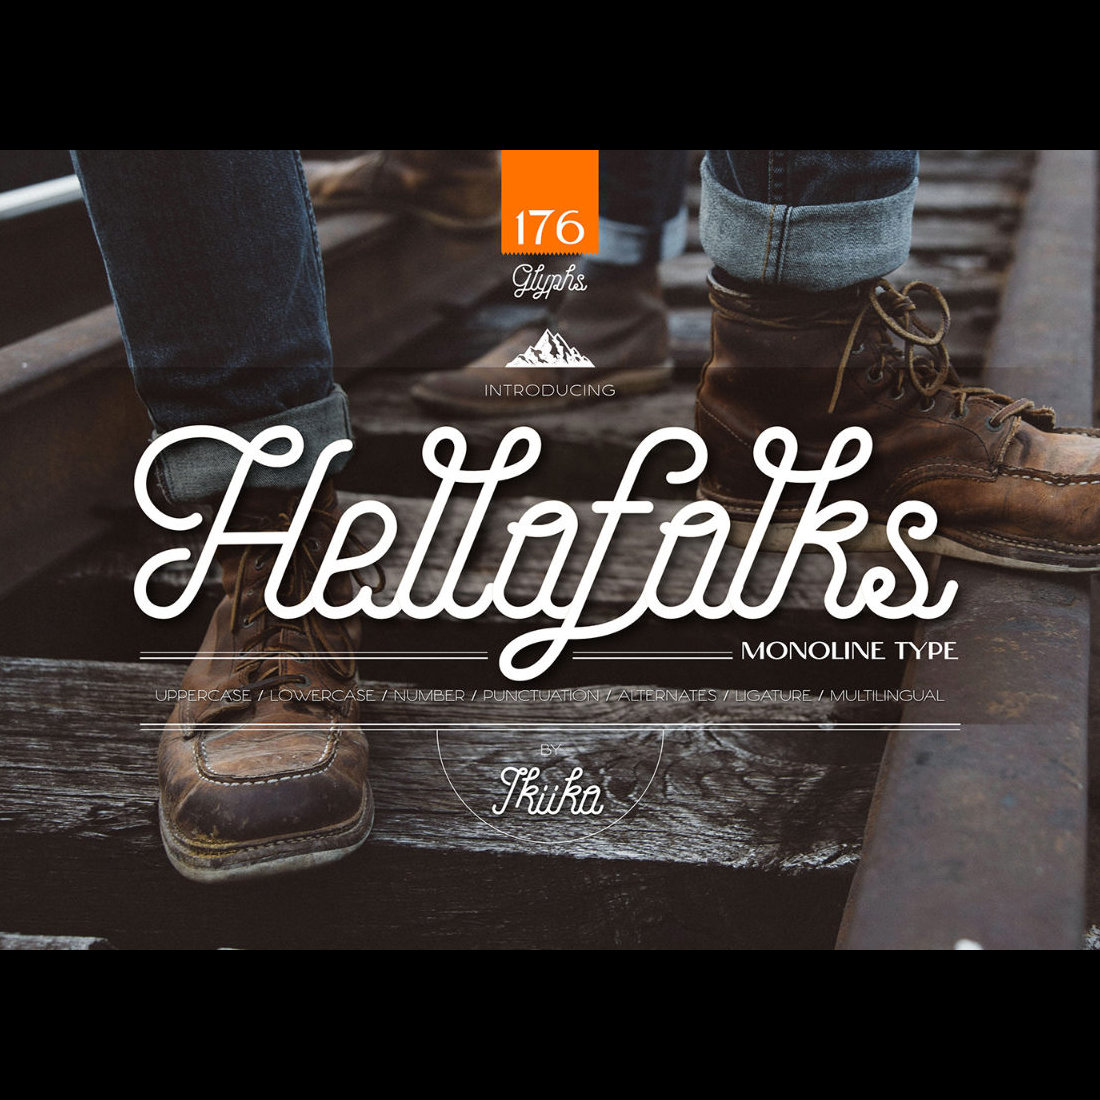 Hellofolks - Monoline Typeface cover image.